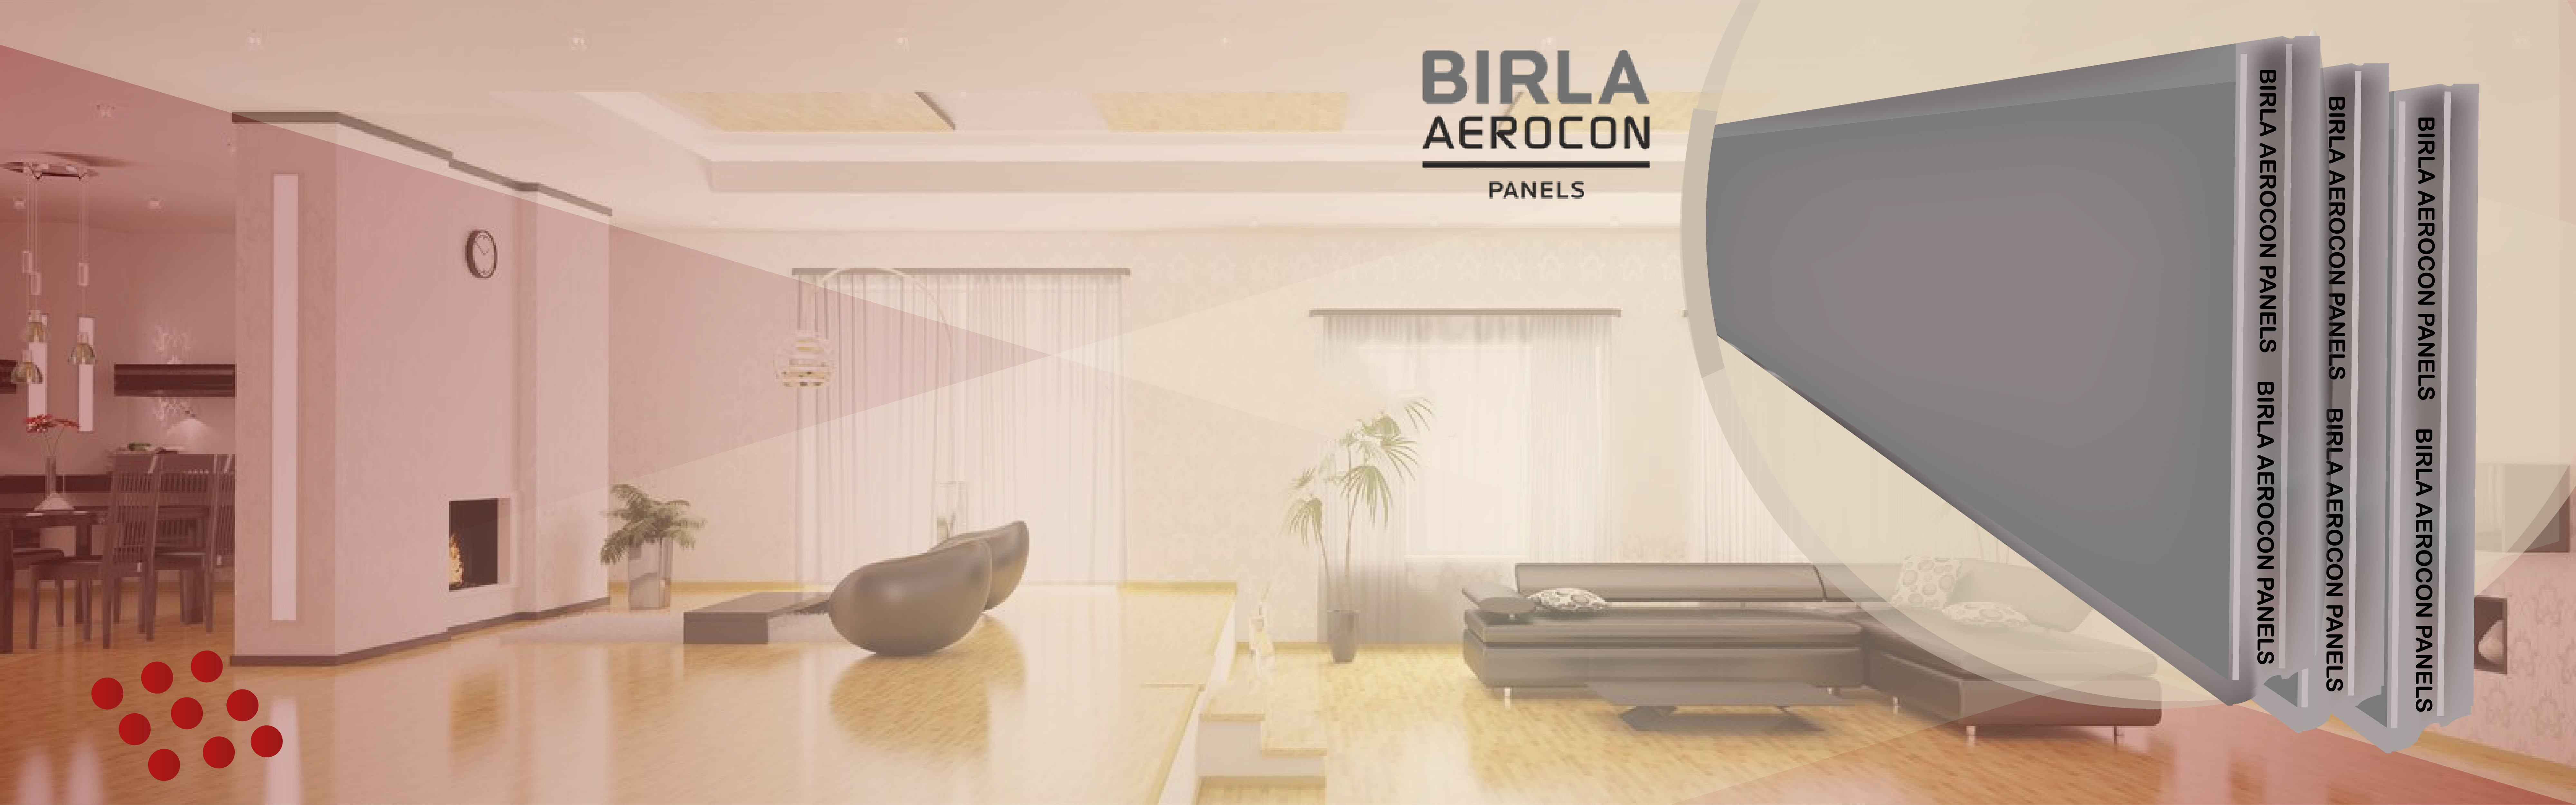 Birla Aerocon Panels